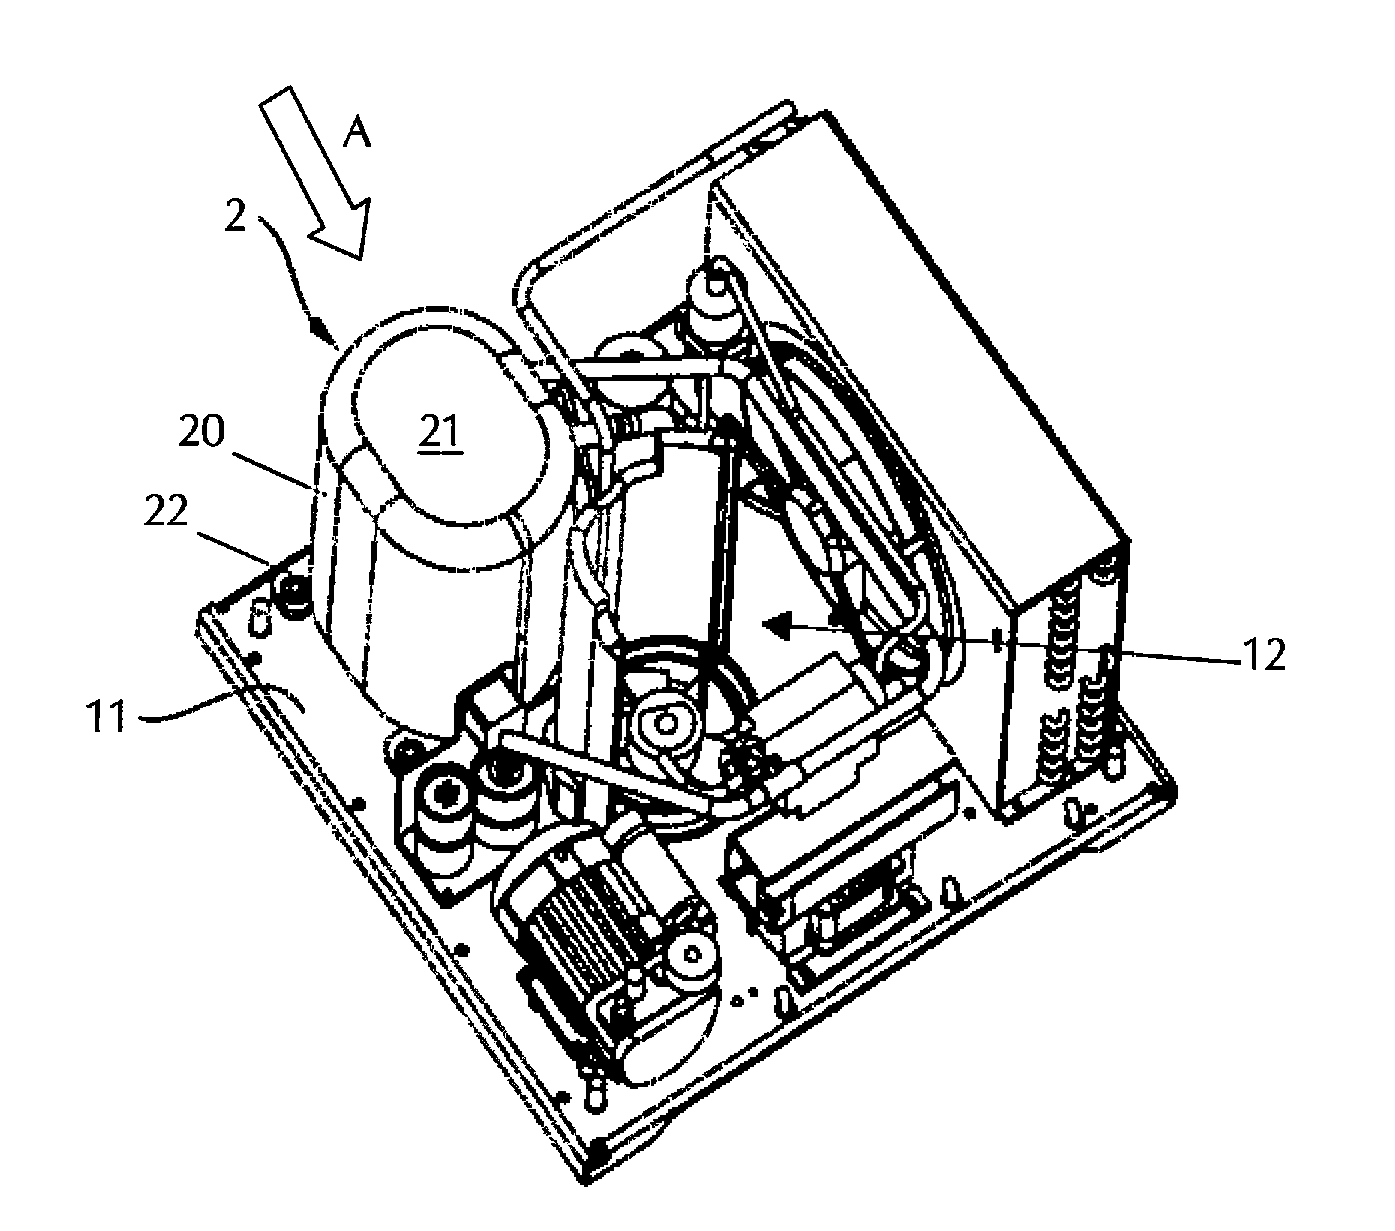 Laboratory centrifuge having insulated compressor